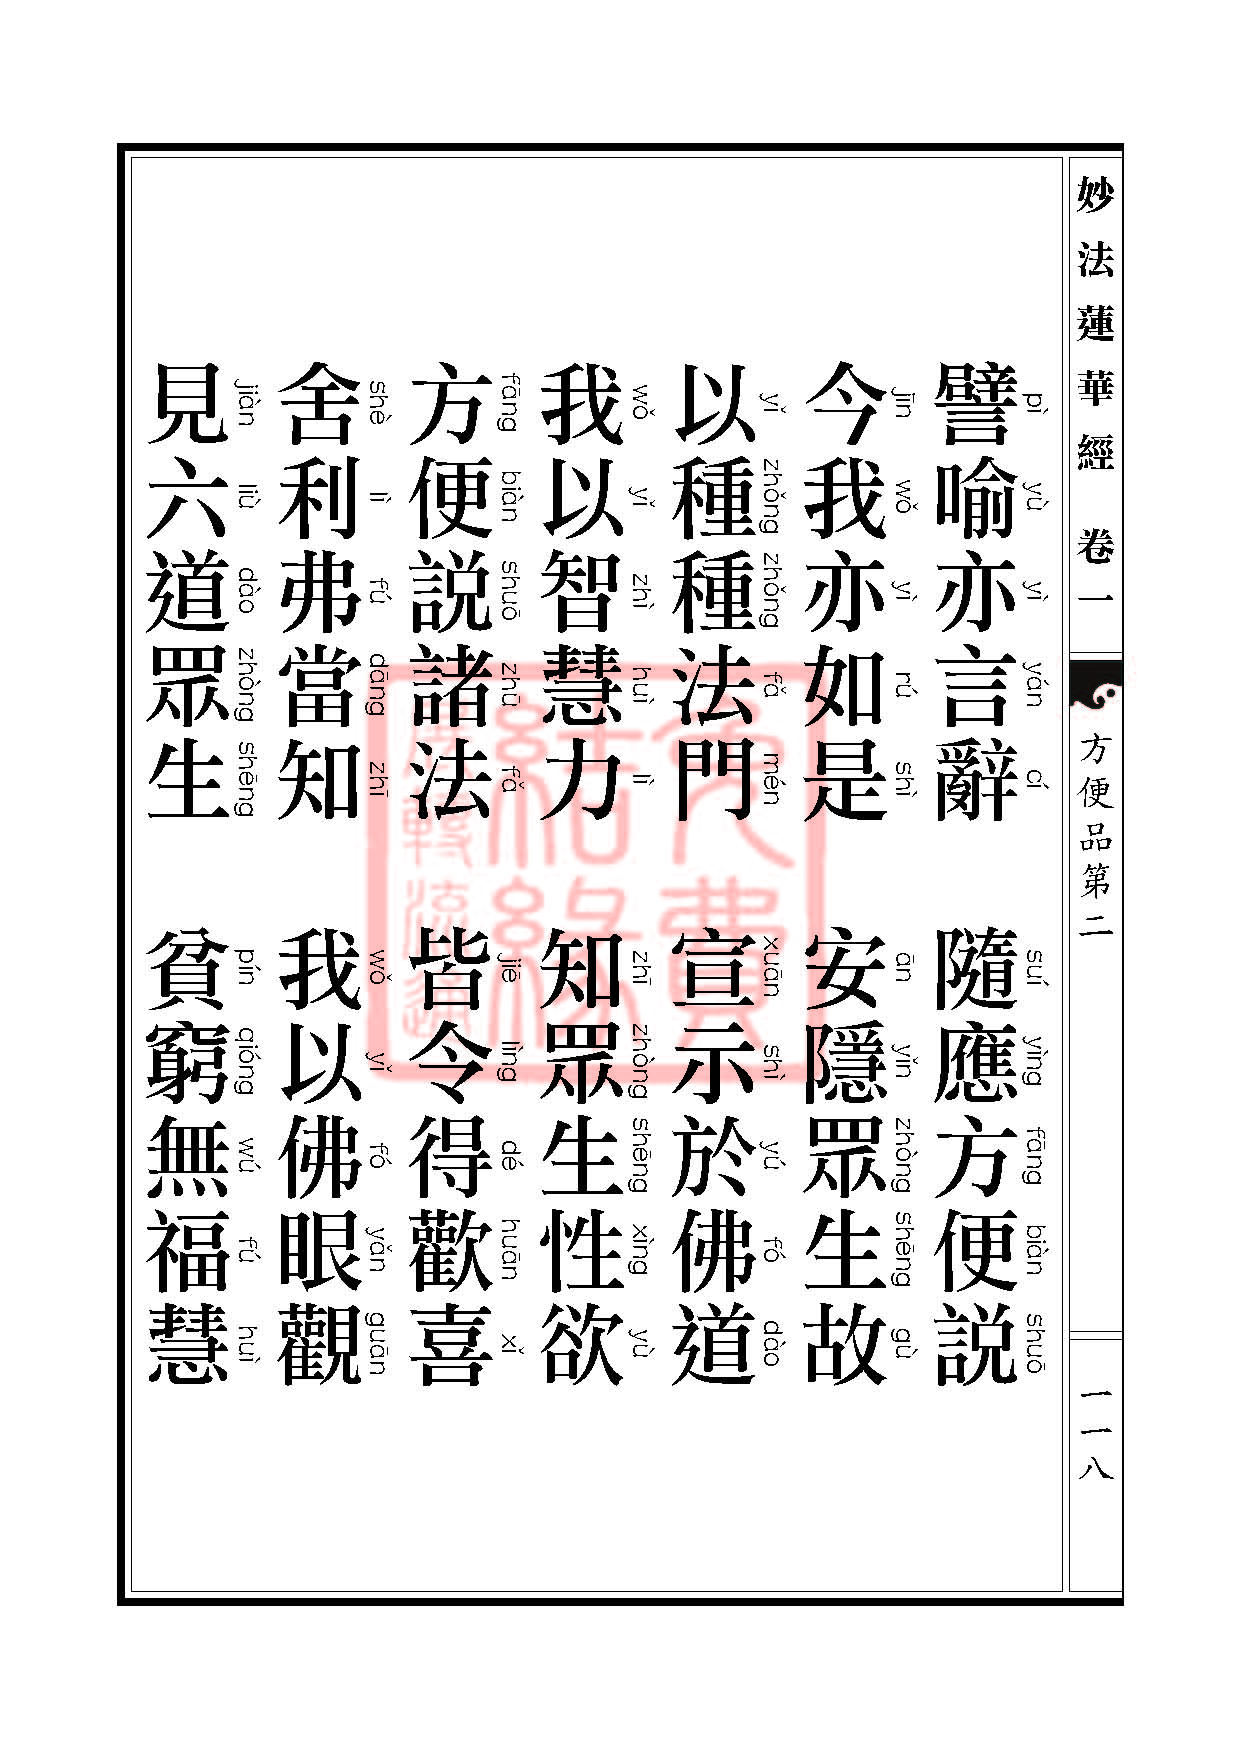 Book_FHJ_HK-A6-PY_Web_ҳ_118.jpg